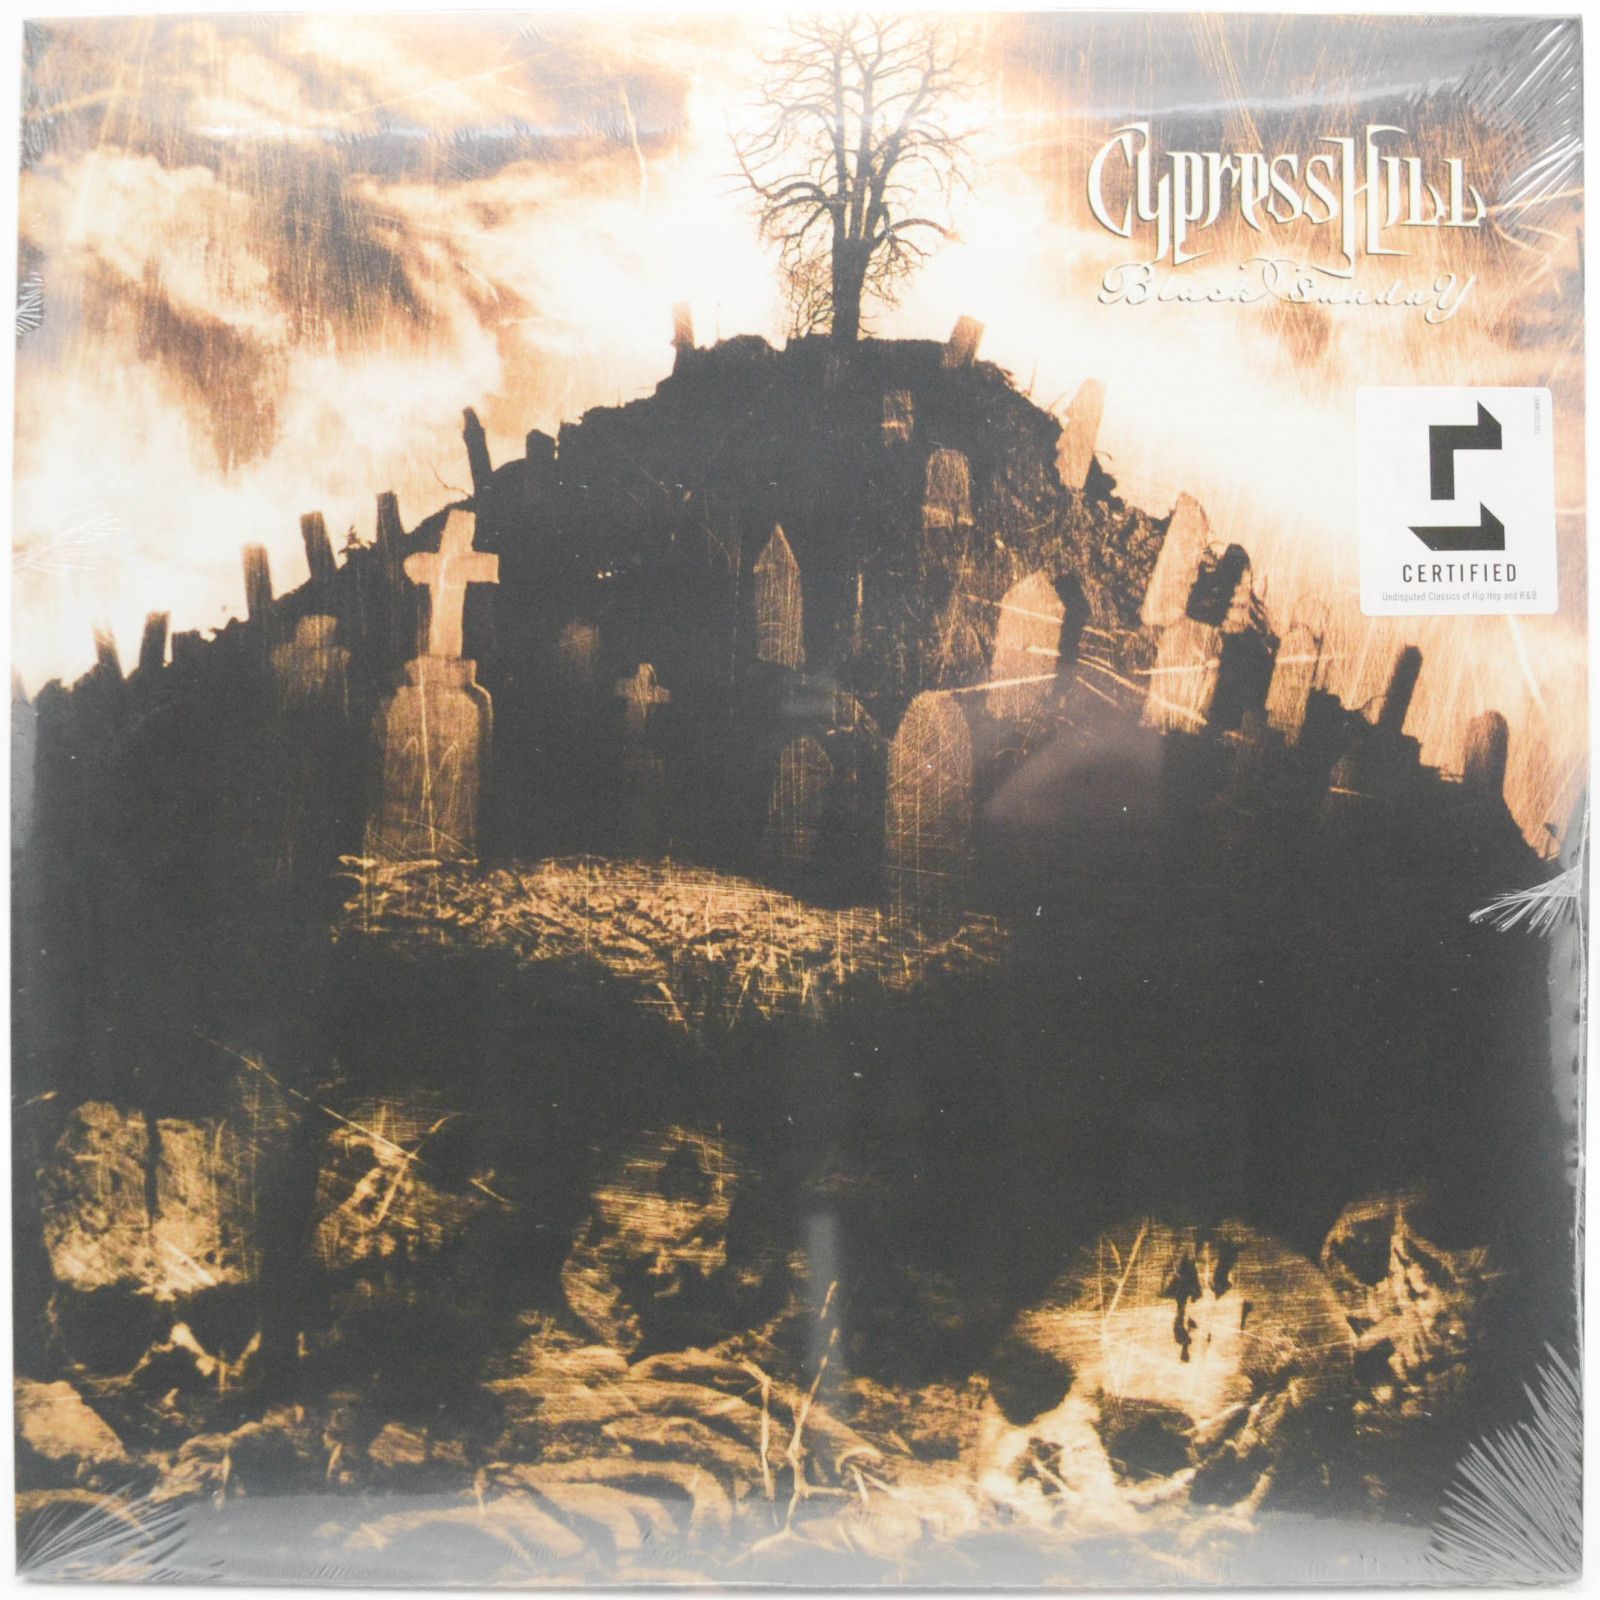 Cypress Hill — Black Sunday (2LP), 1993